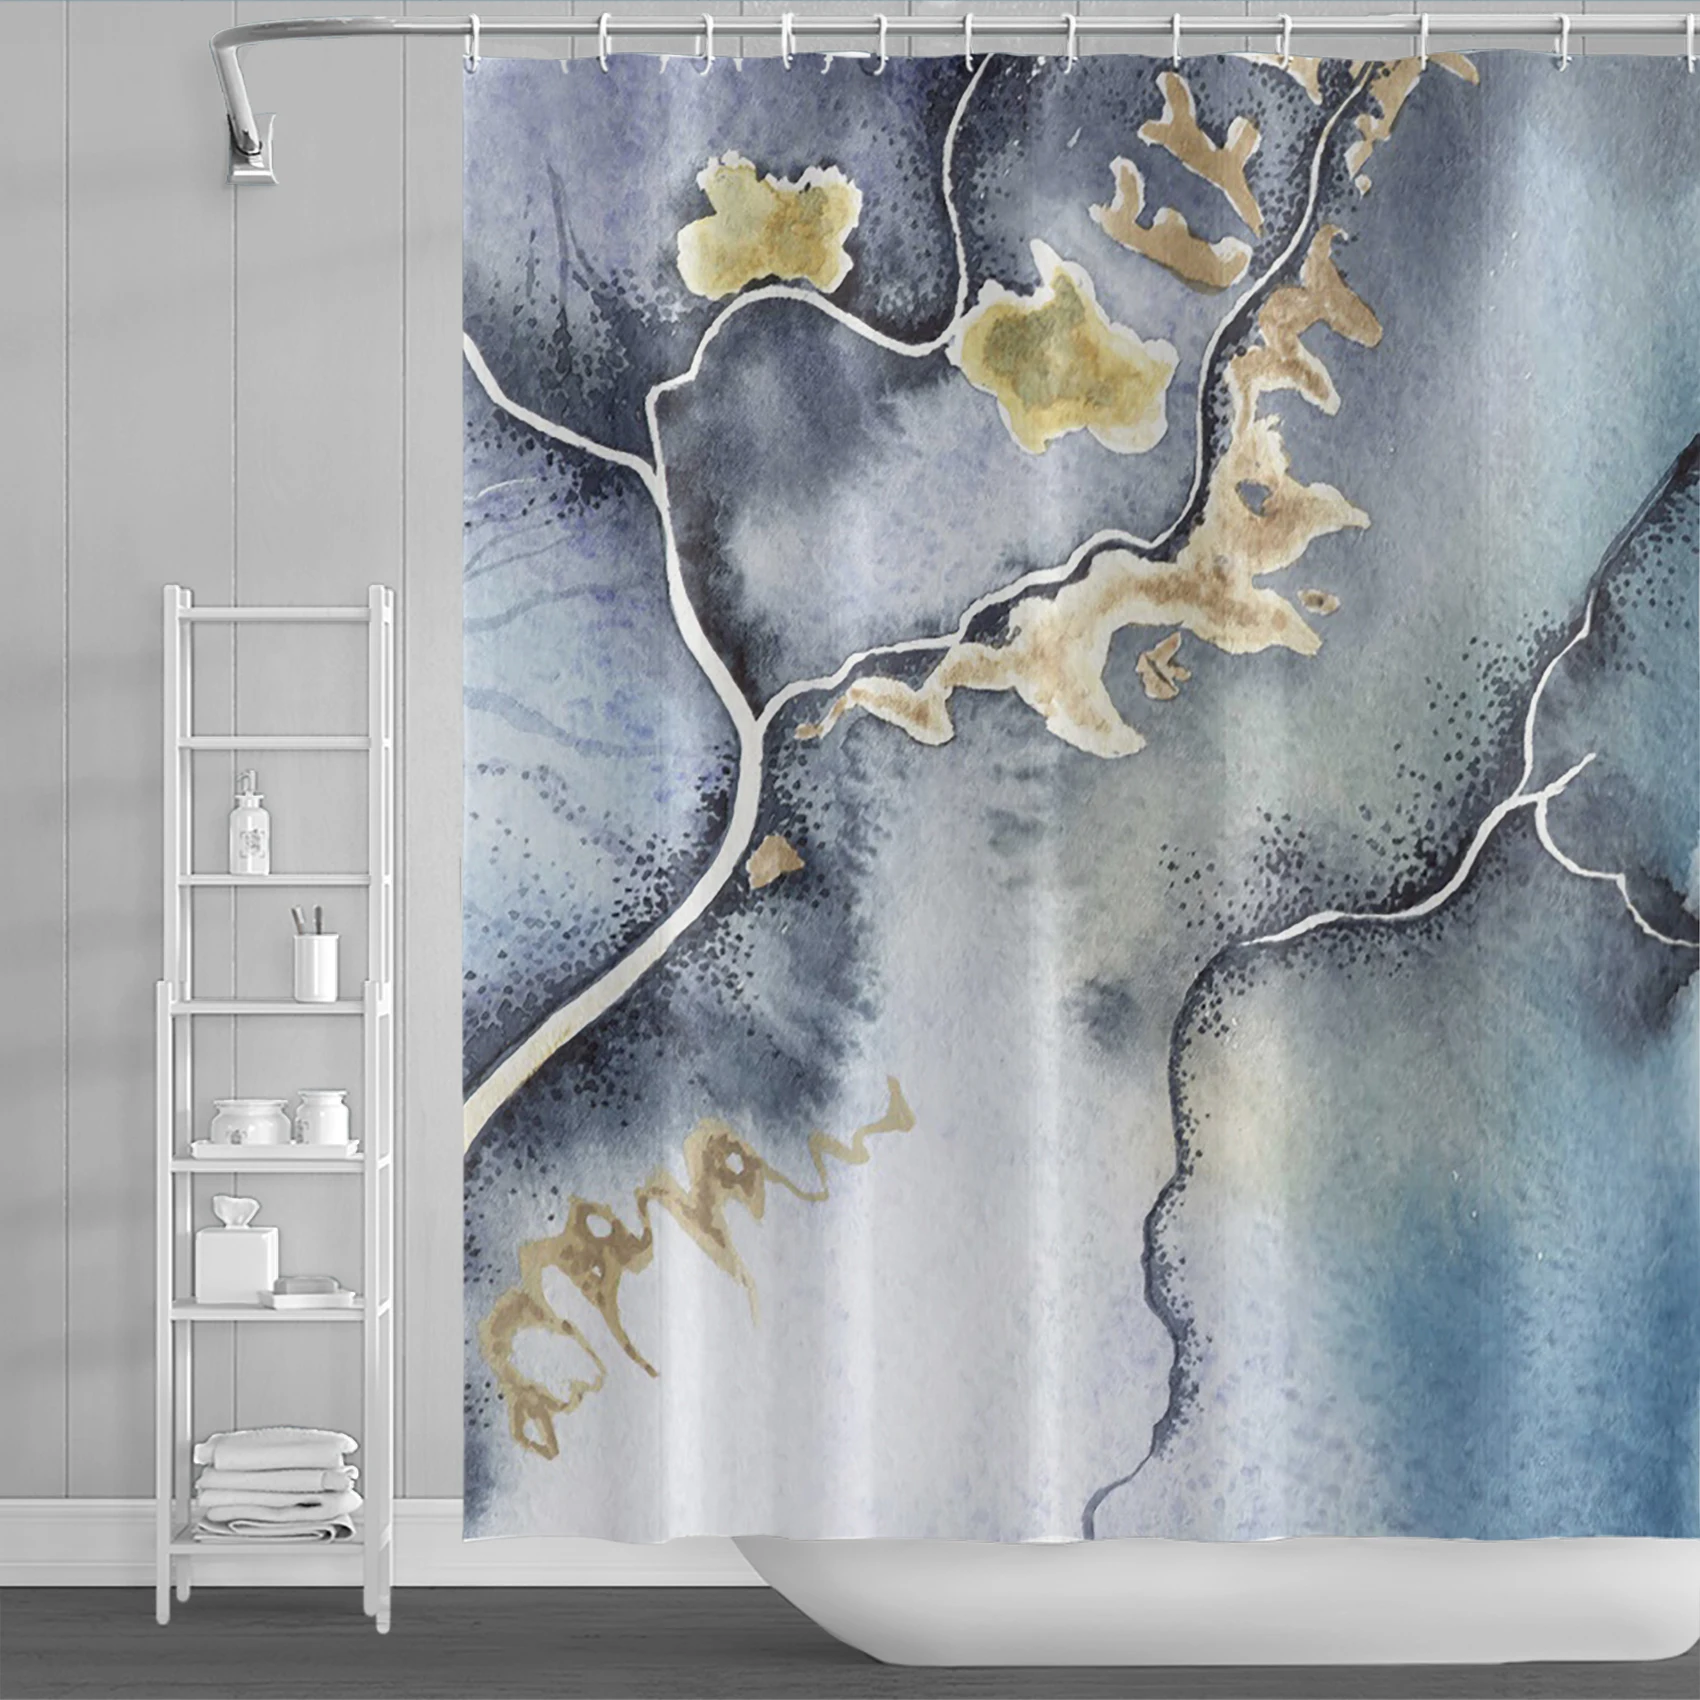 

Мраморная занавеска для душа, роскошная абстрактная ткань, водонепроницаемая черно-белая текстурная занавеска для душа с рисунком для ванной комнаты